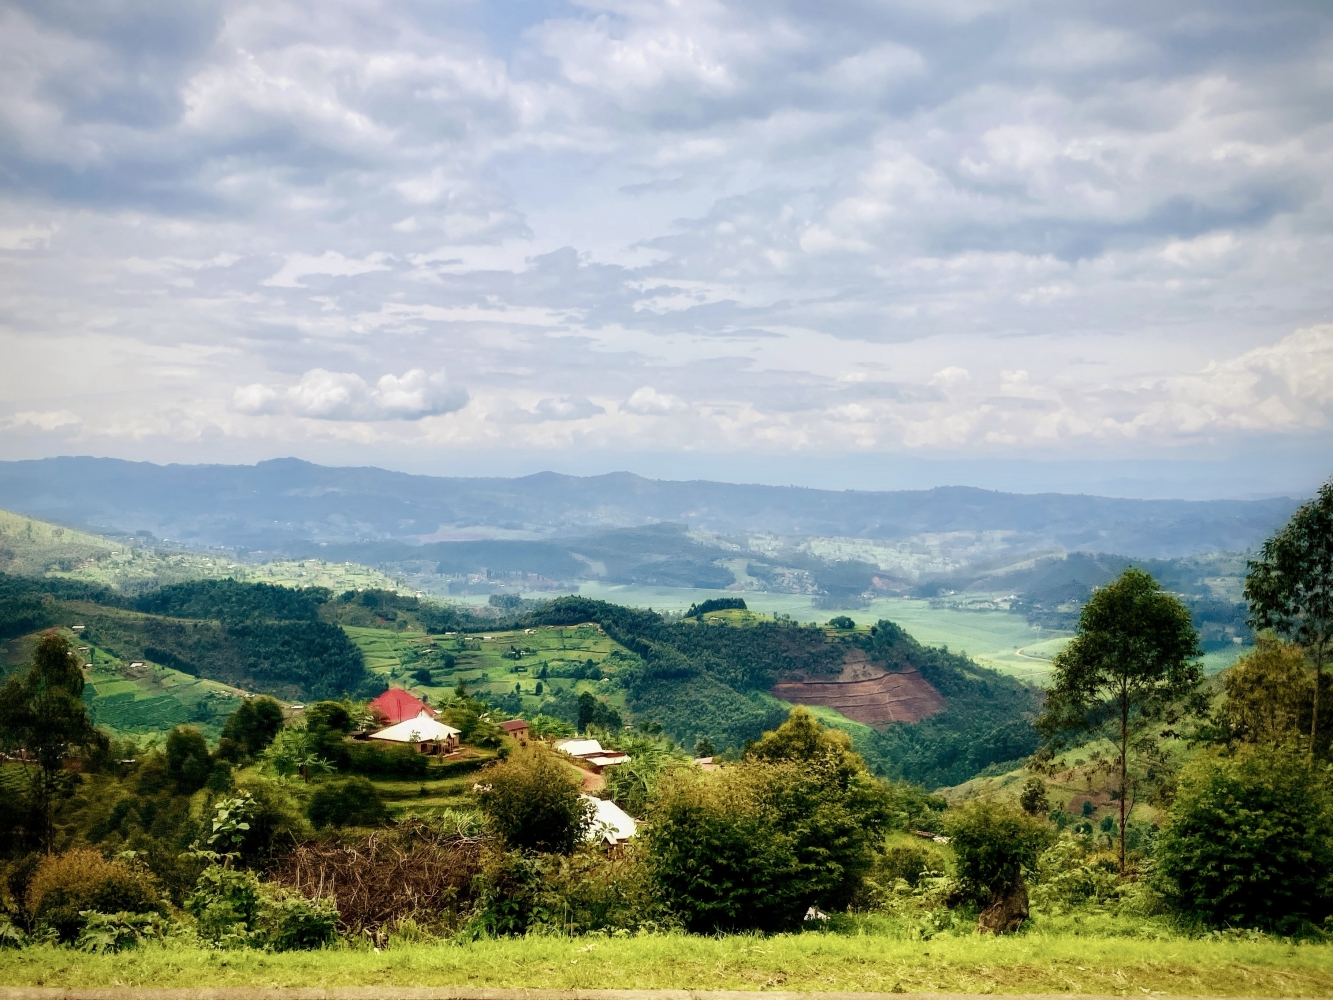  I Wonder Rwanda, Is it All Tea Trees, Rainforests and Gorillas?